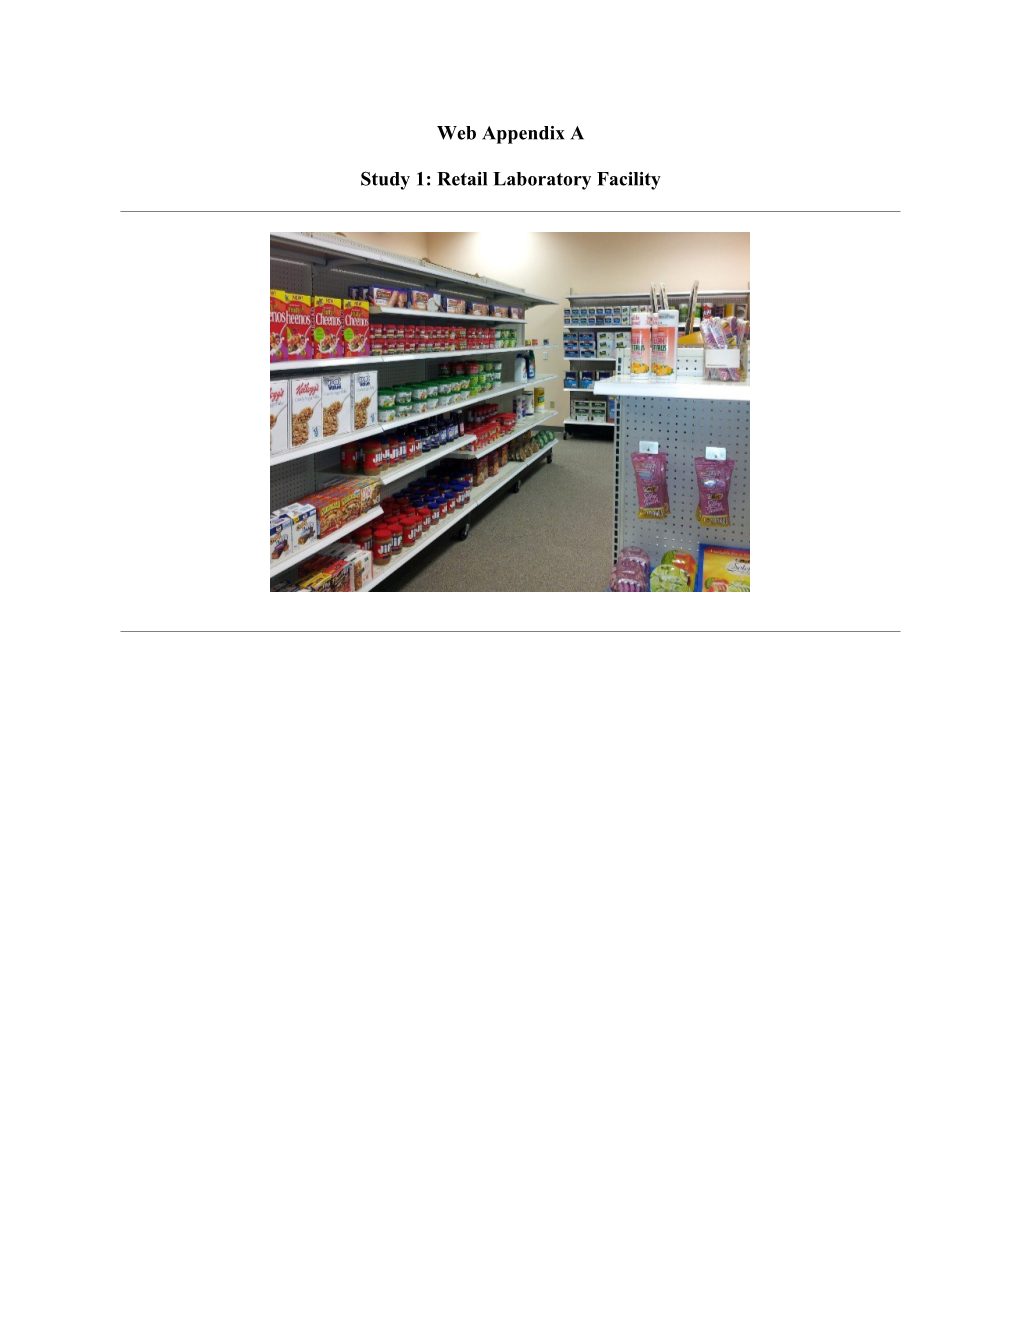 Study 1: Retail Laboratory Facility